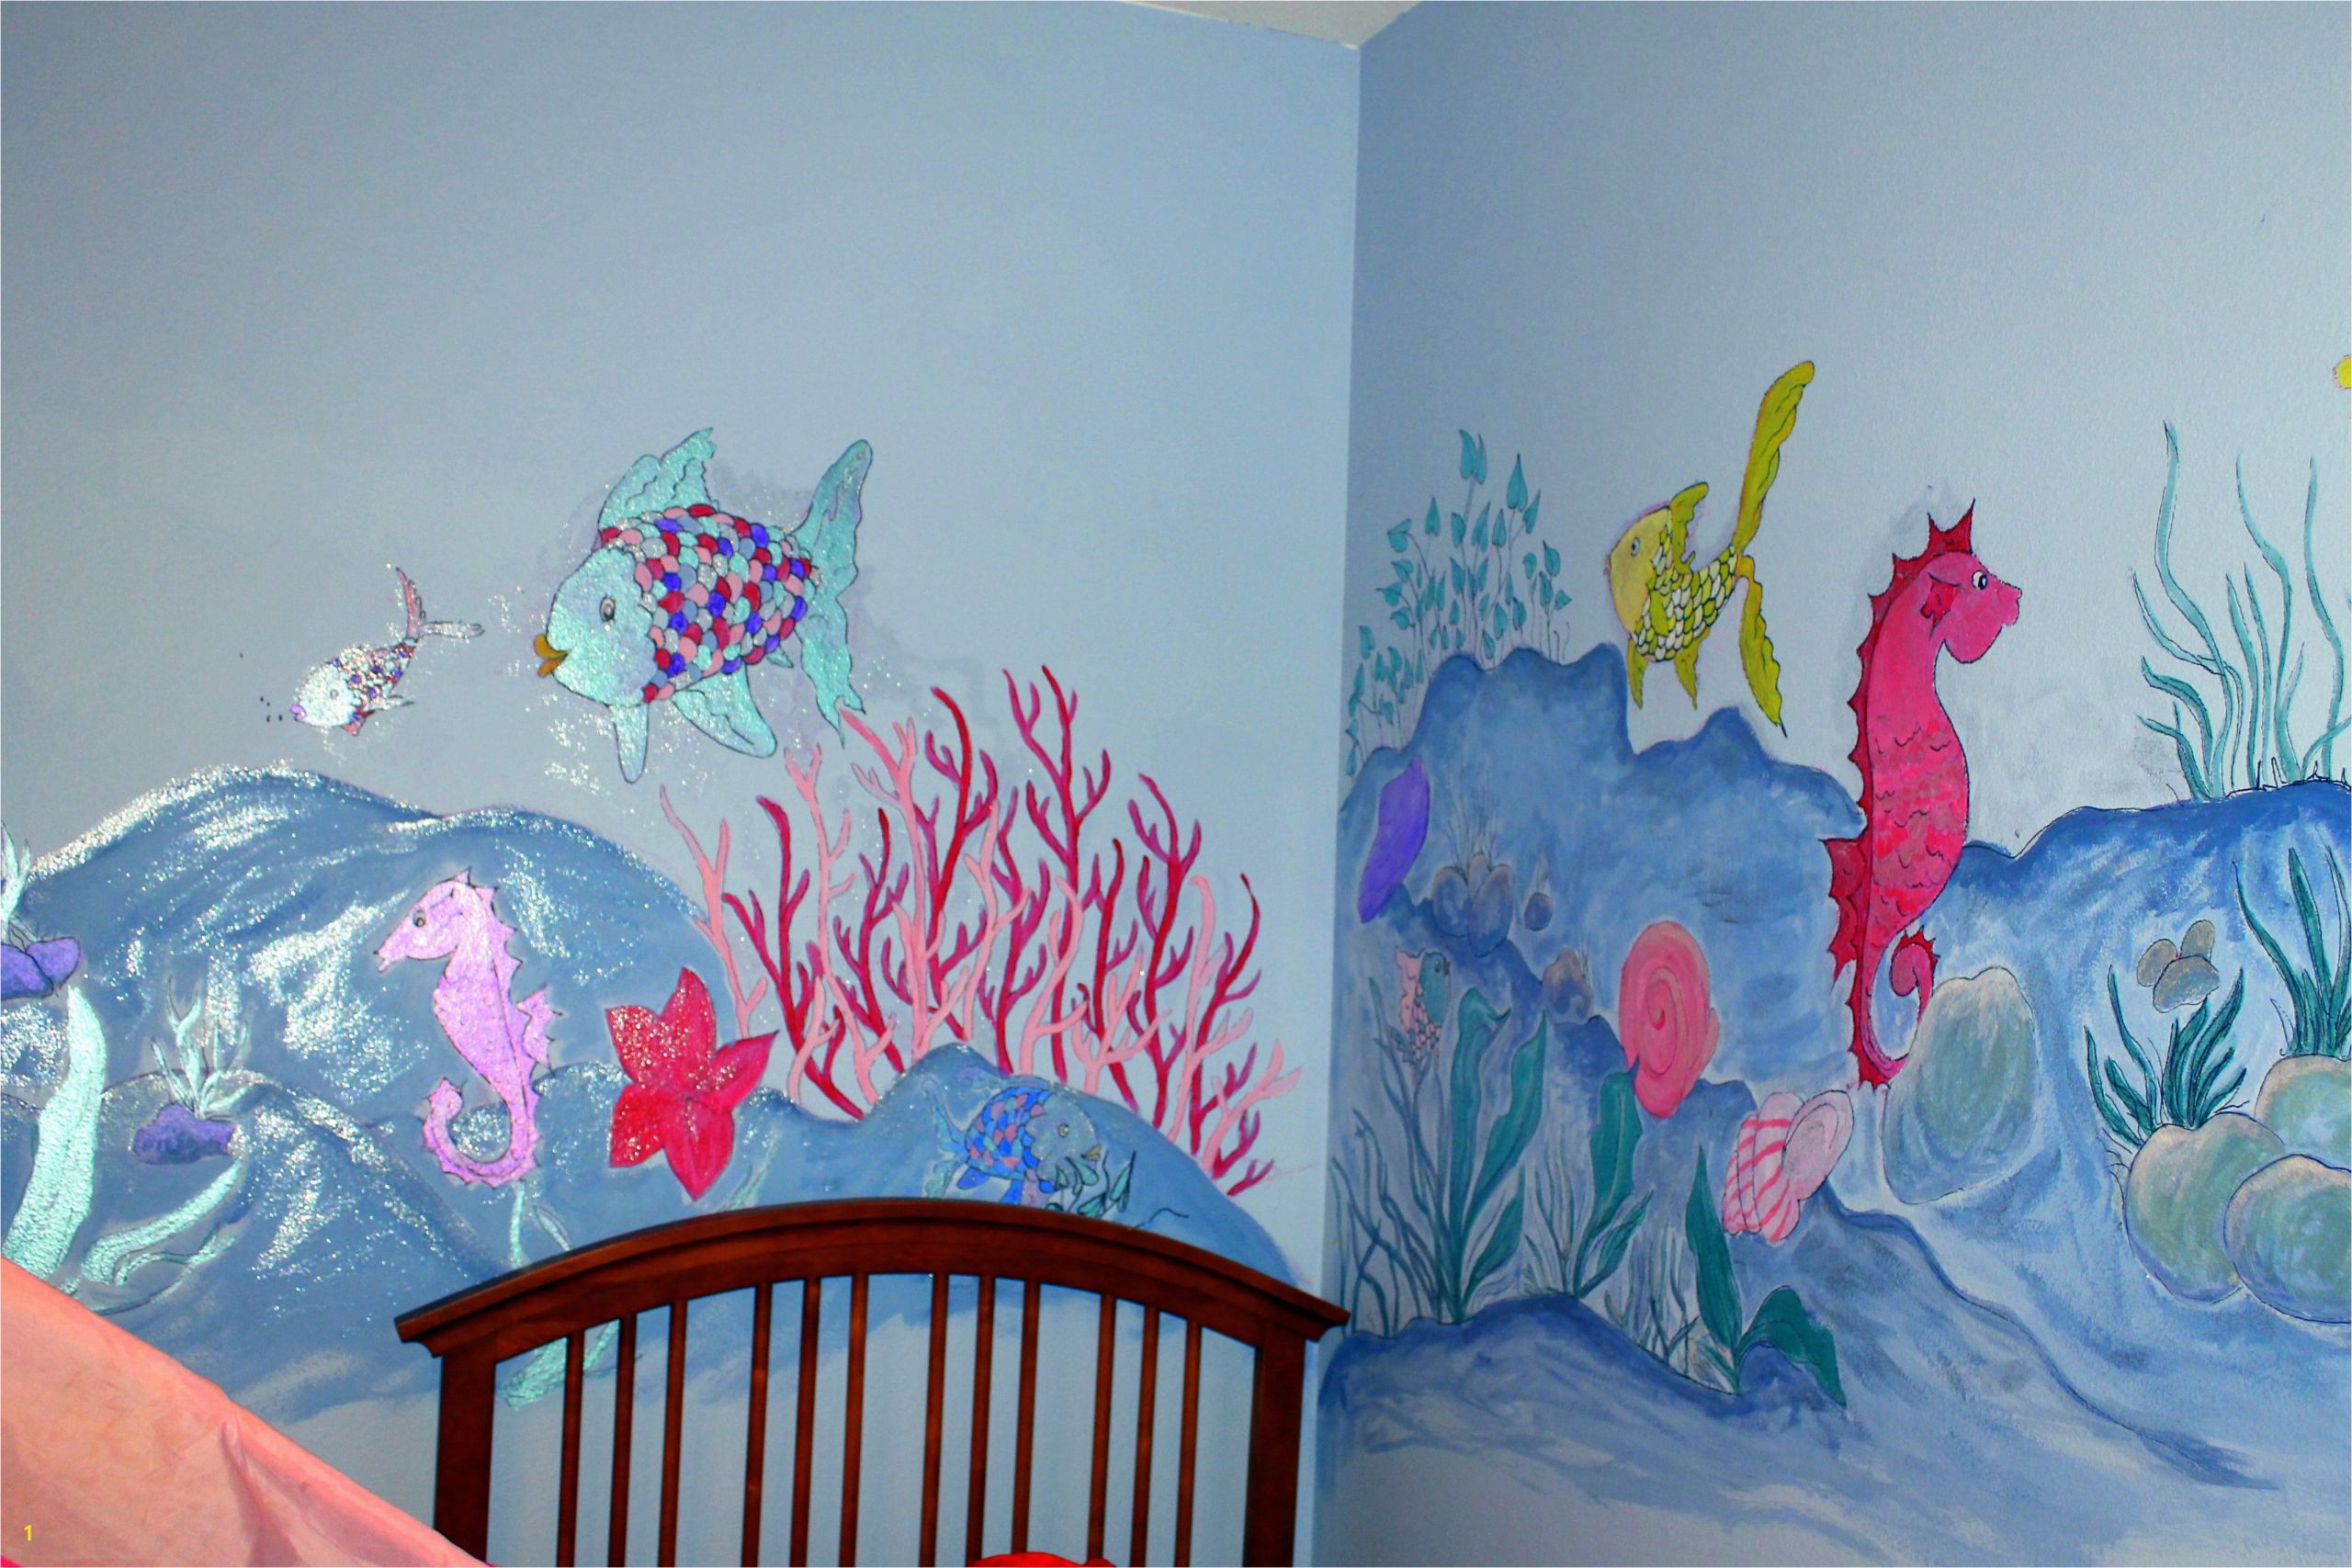 Mural Wall Painting Ideas Dorisann S Designs Rainbow Fish